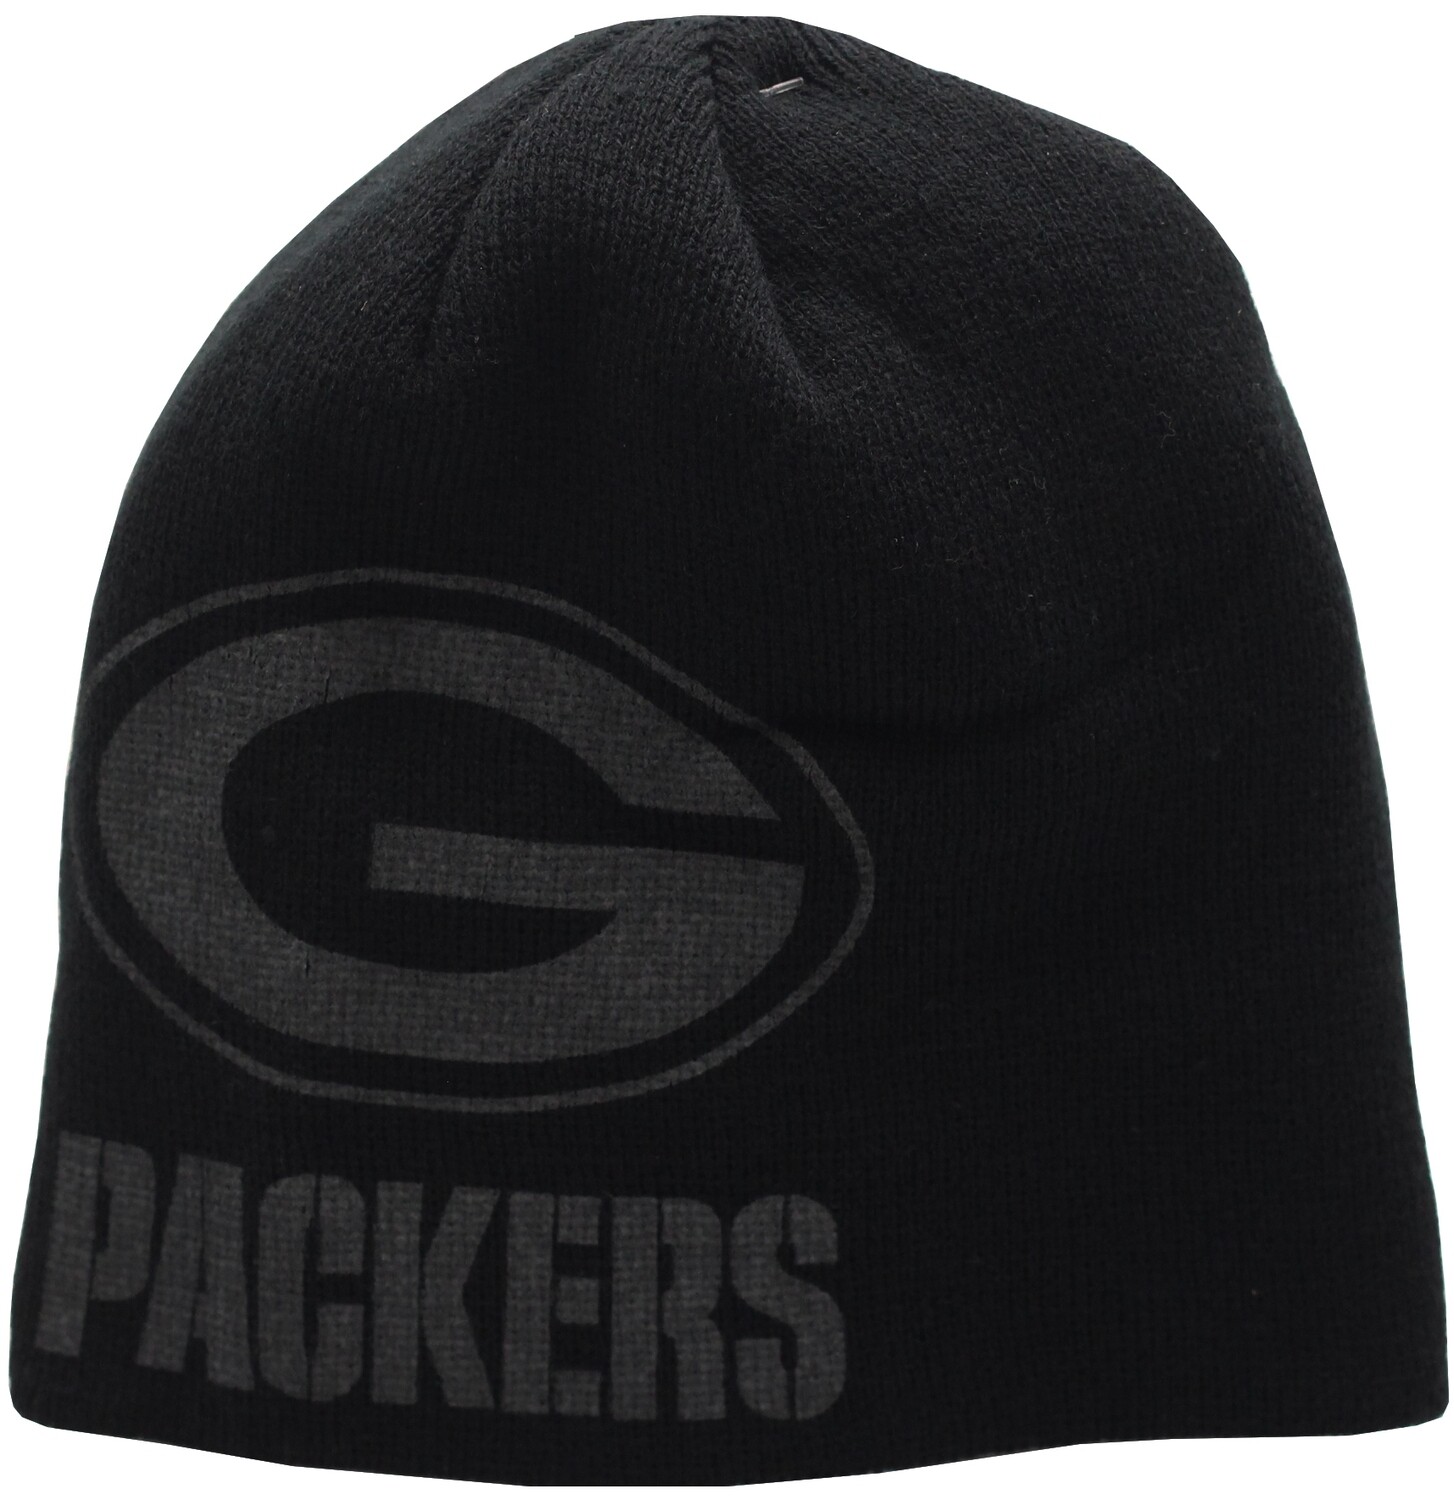 Green Bay Packers Skull Knit Hat 2-Tone Black